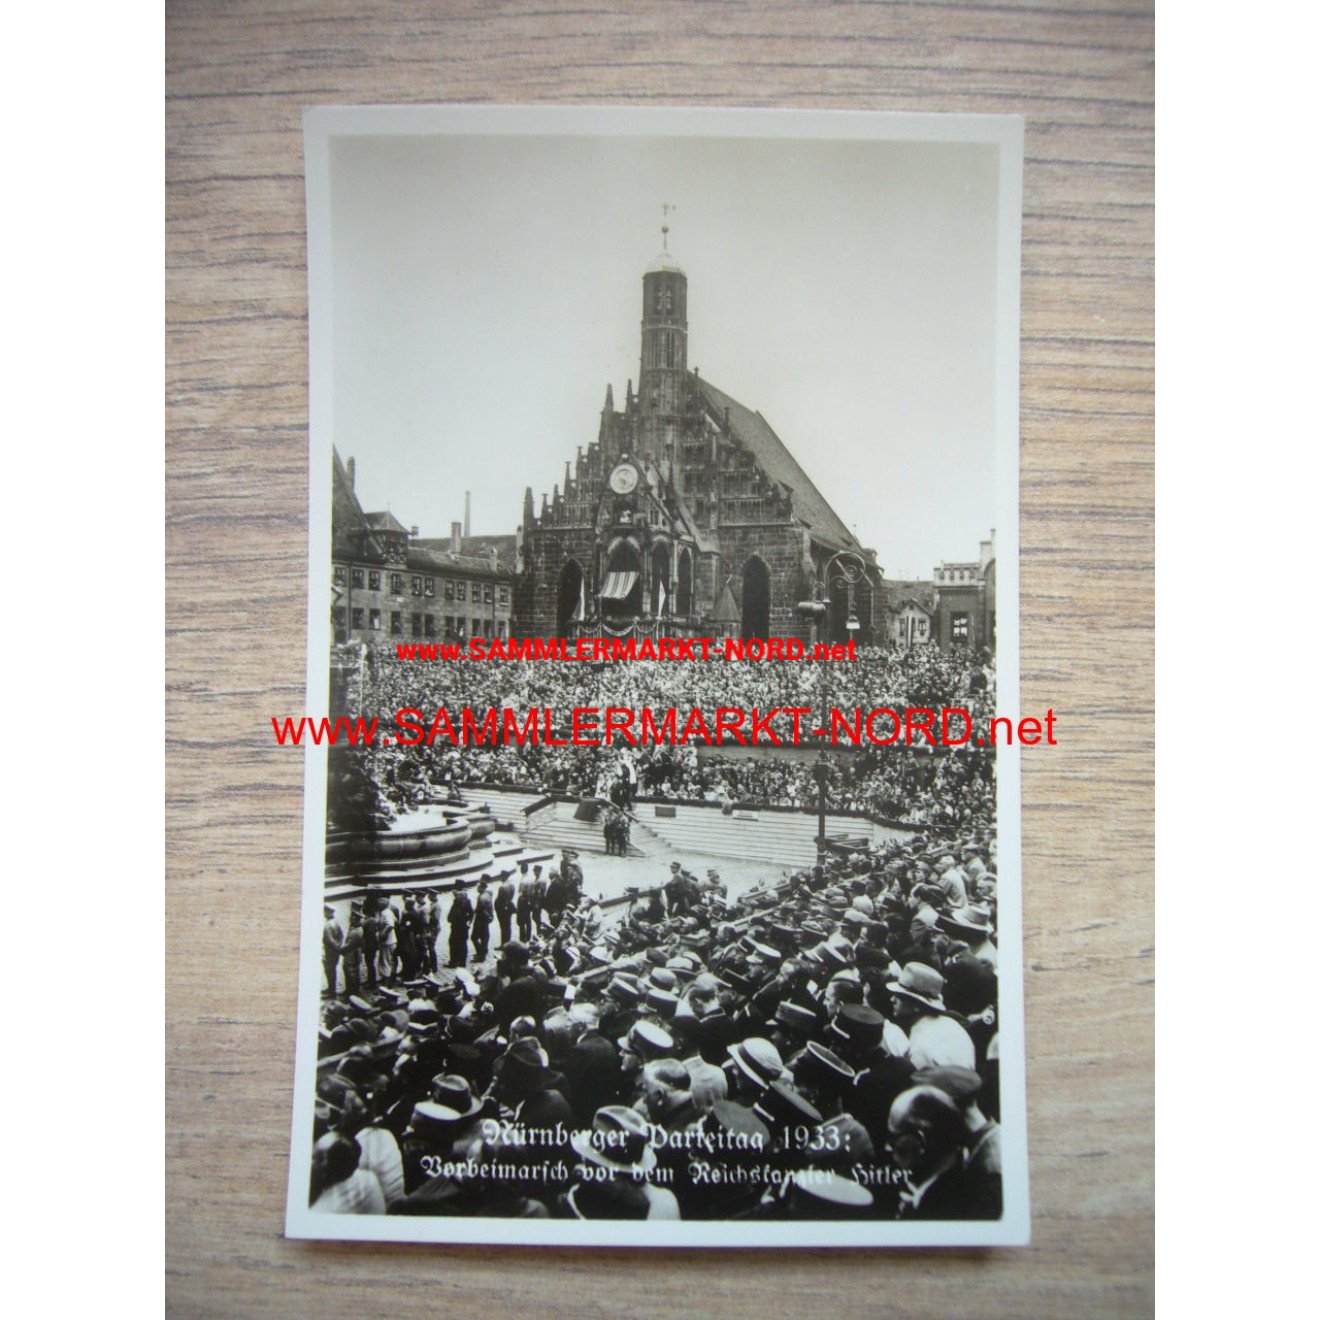 Nürnberger Parteitag 1933 (NSDAP) - Postkarte